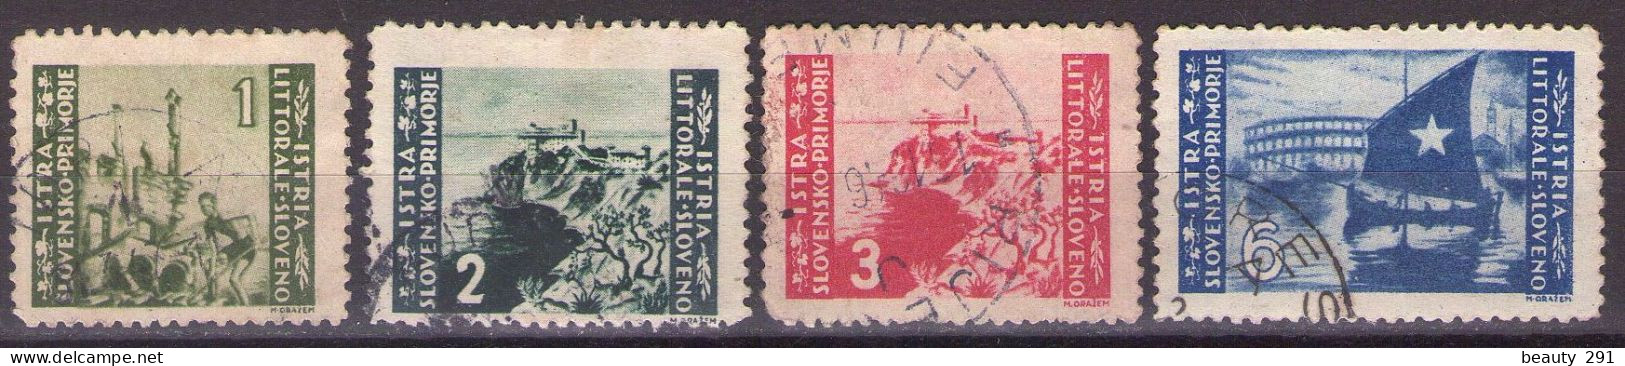 ISTRIA E LITORALE SLOVENO 1946. Tiratura Di Belgrado, Dent. 11-1/2, Sass. 63-66 USED - Yugoslavian Occ.: Slovenian Shore